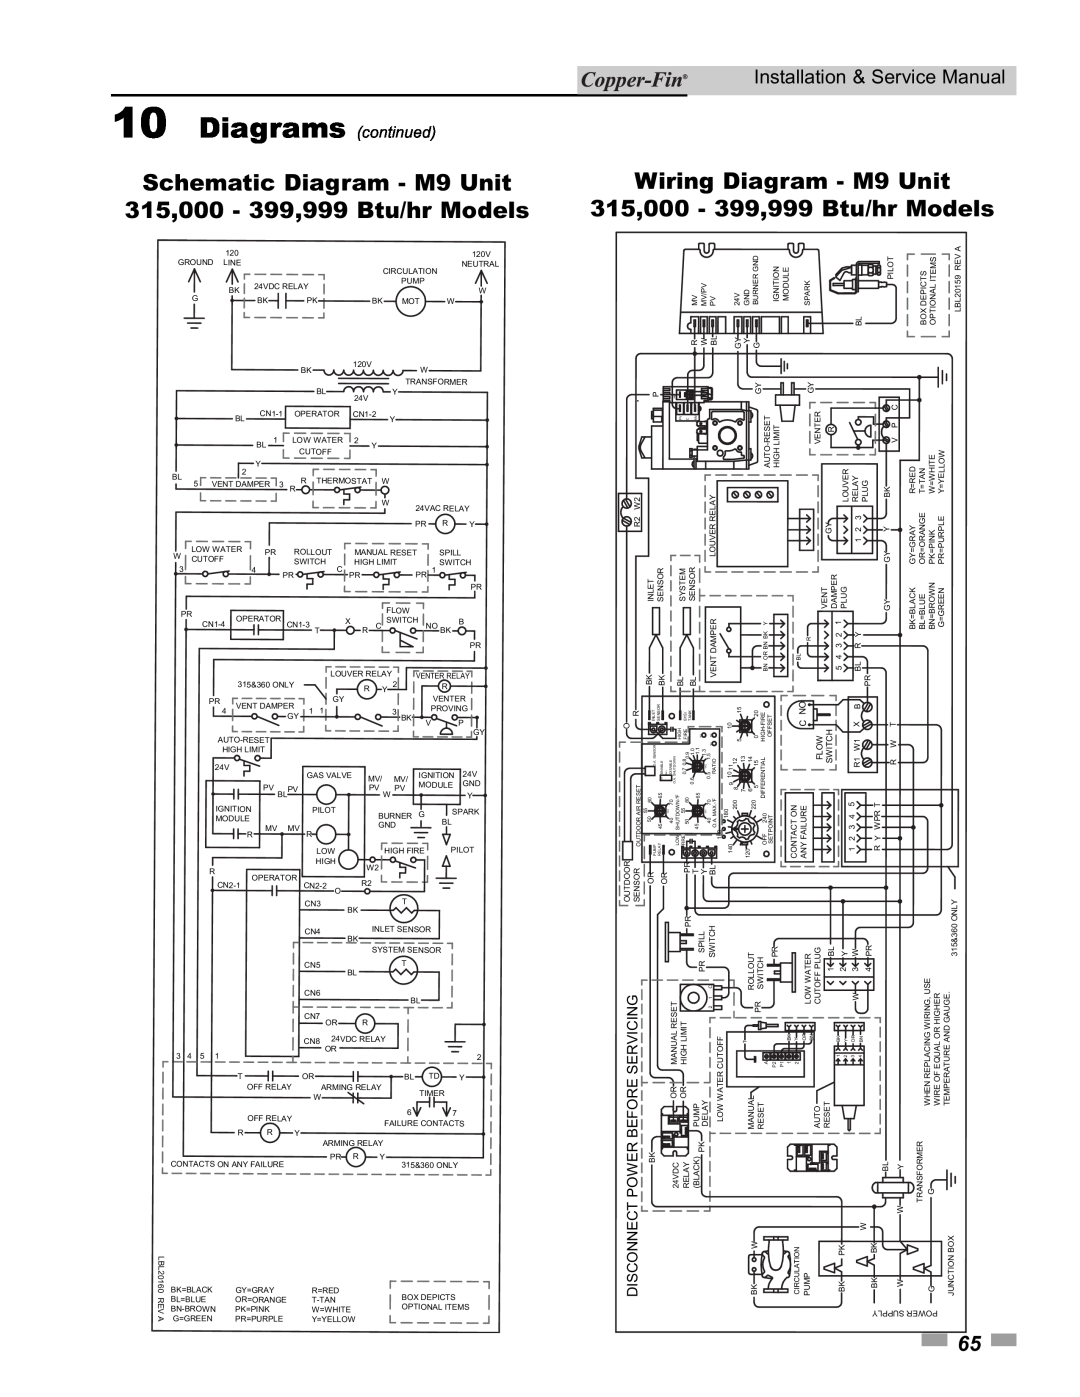 Lochinvar 90 Schematic Diagram - M9 Unit, Wiring Diagram - M9 Unit, 315,000 - 399,999 Btu/hr Models, Diagrams continued 